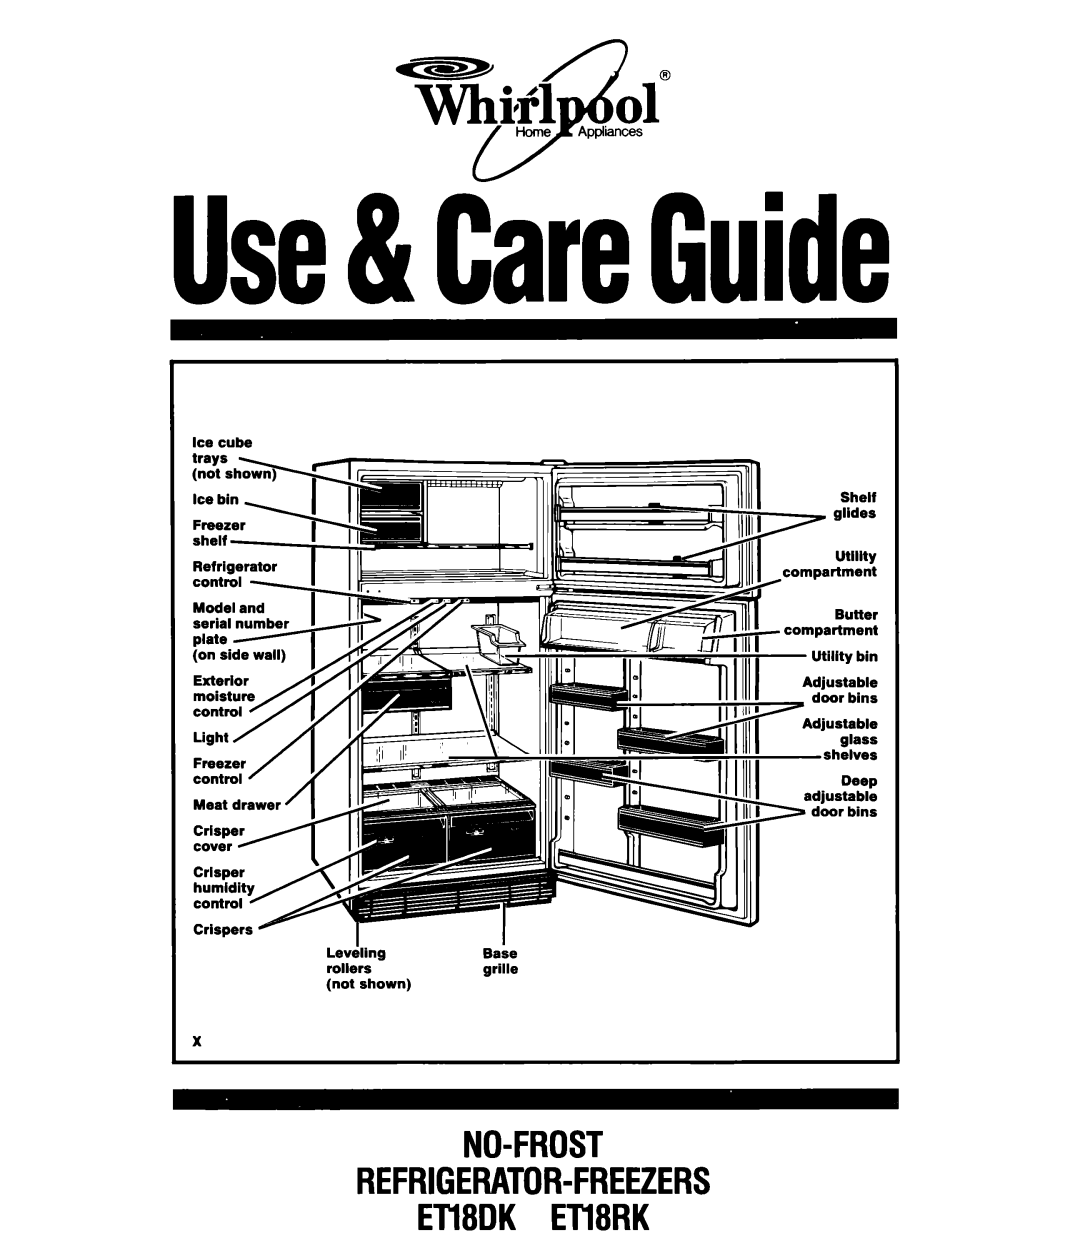 Whirlpool manual Ell8DK Ell8RK, No-Frost Refrigerator-Freezers 